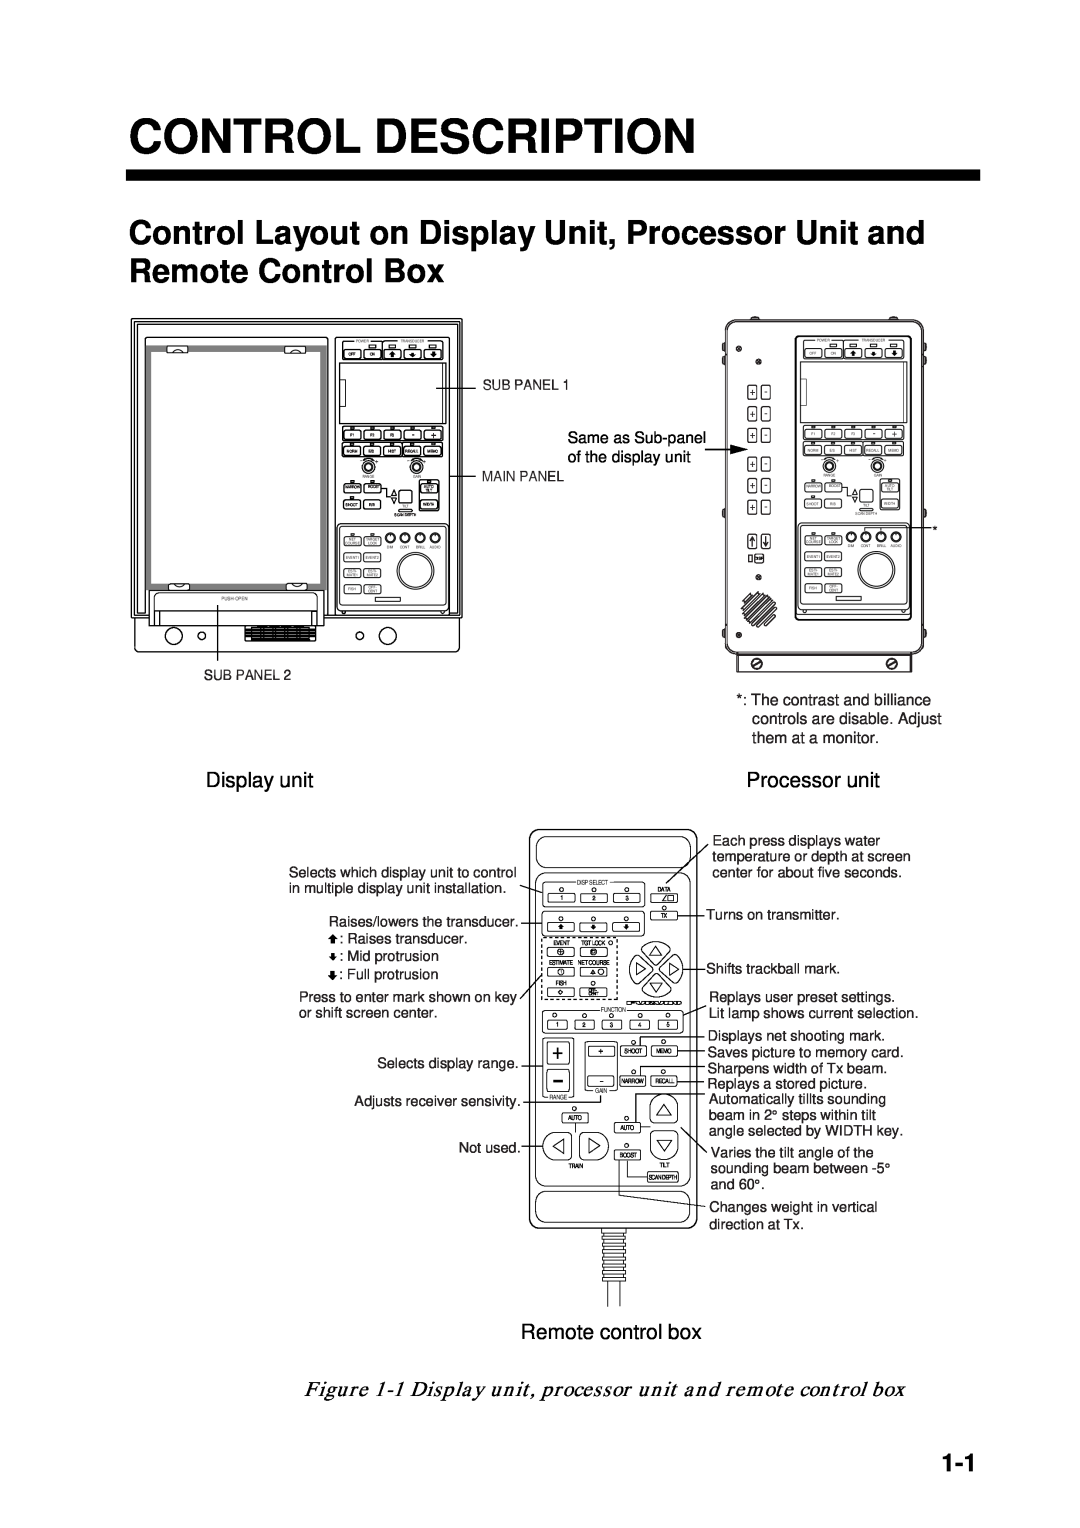 Furuno CSH-53 manual Control Description, Control Layout on Display Unit, Processor Unit and Remote Control Box 